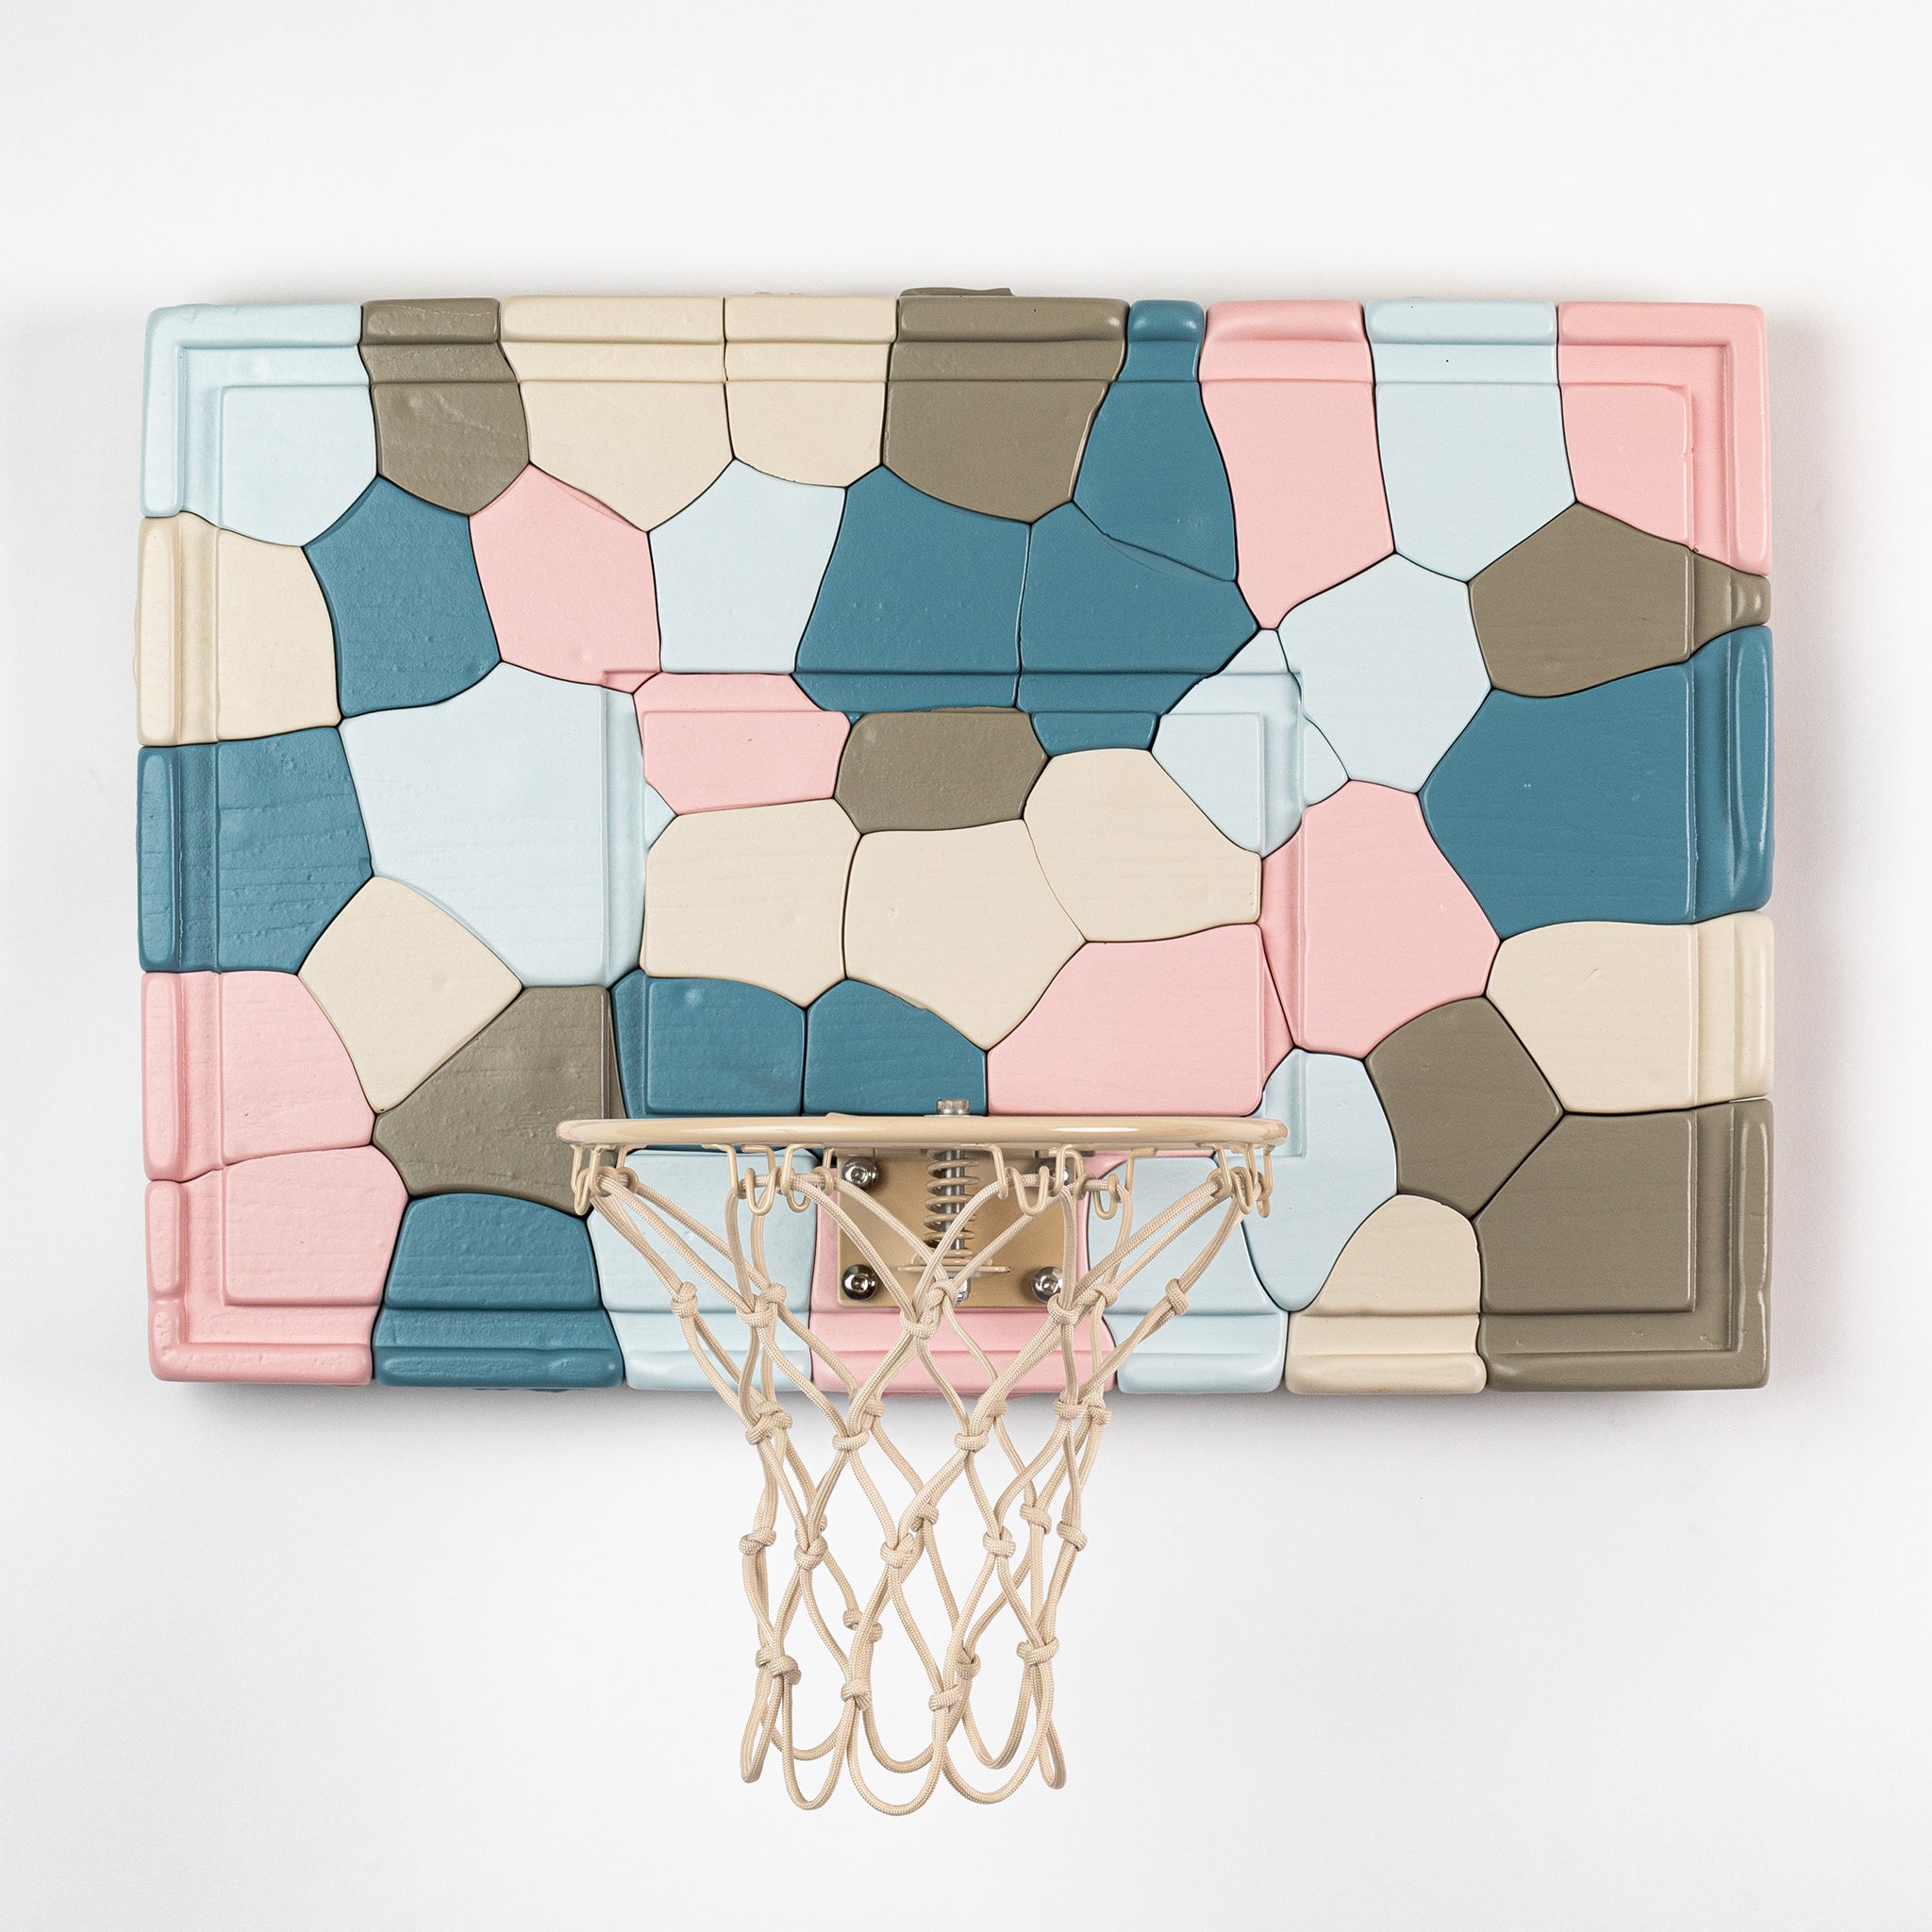 Hand made colorful mini basketball hoop